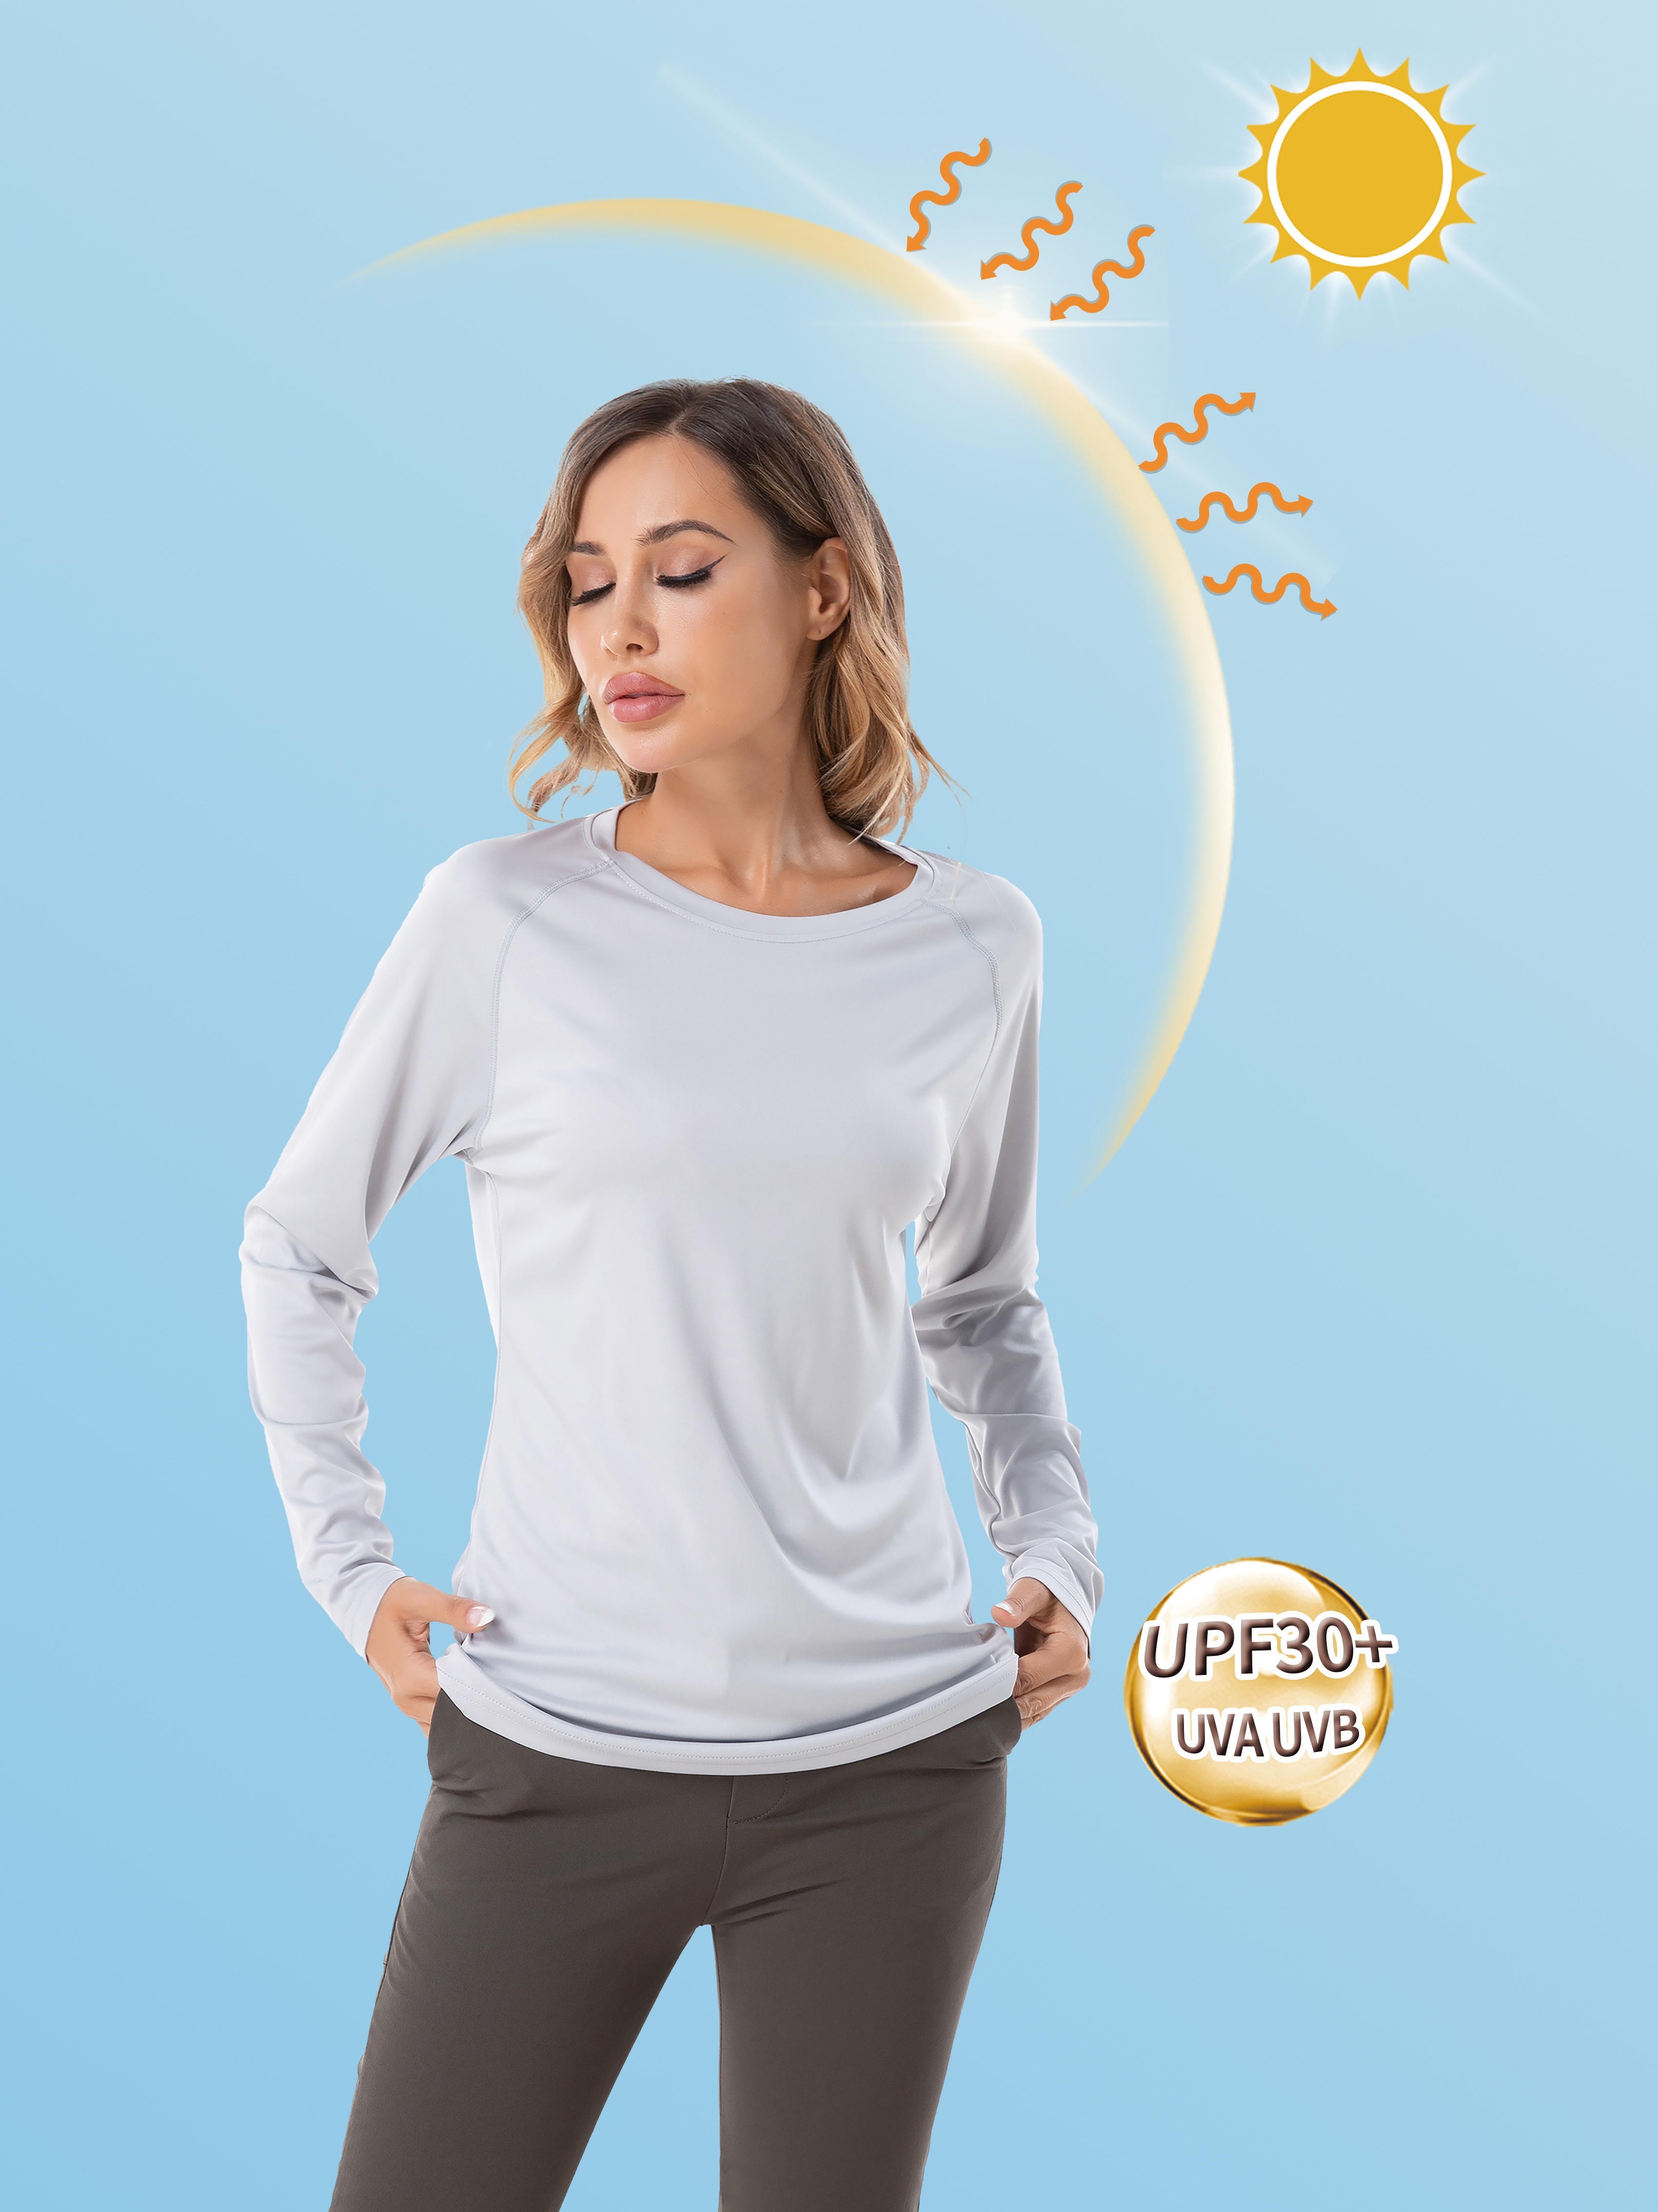 Women's Upf50+ Outdoor Sun Protection Long Sleeve T-Shirt, Quick-drying Sports Fishing Swim Suit, Women's Clothing